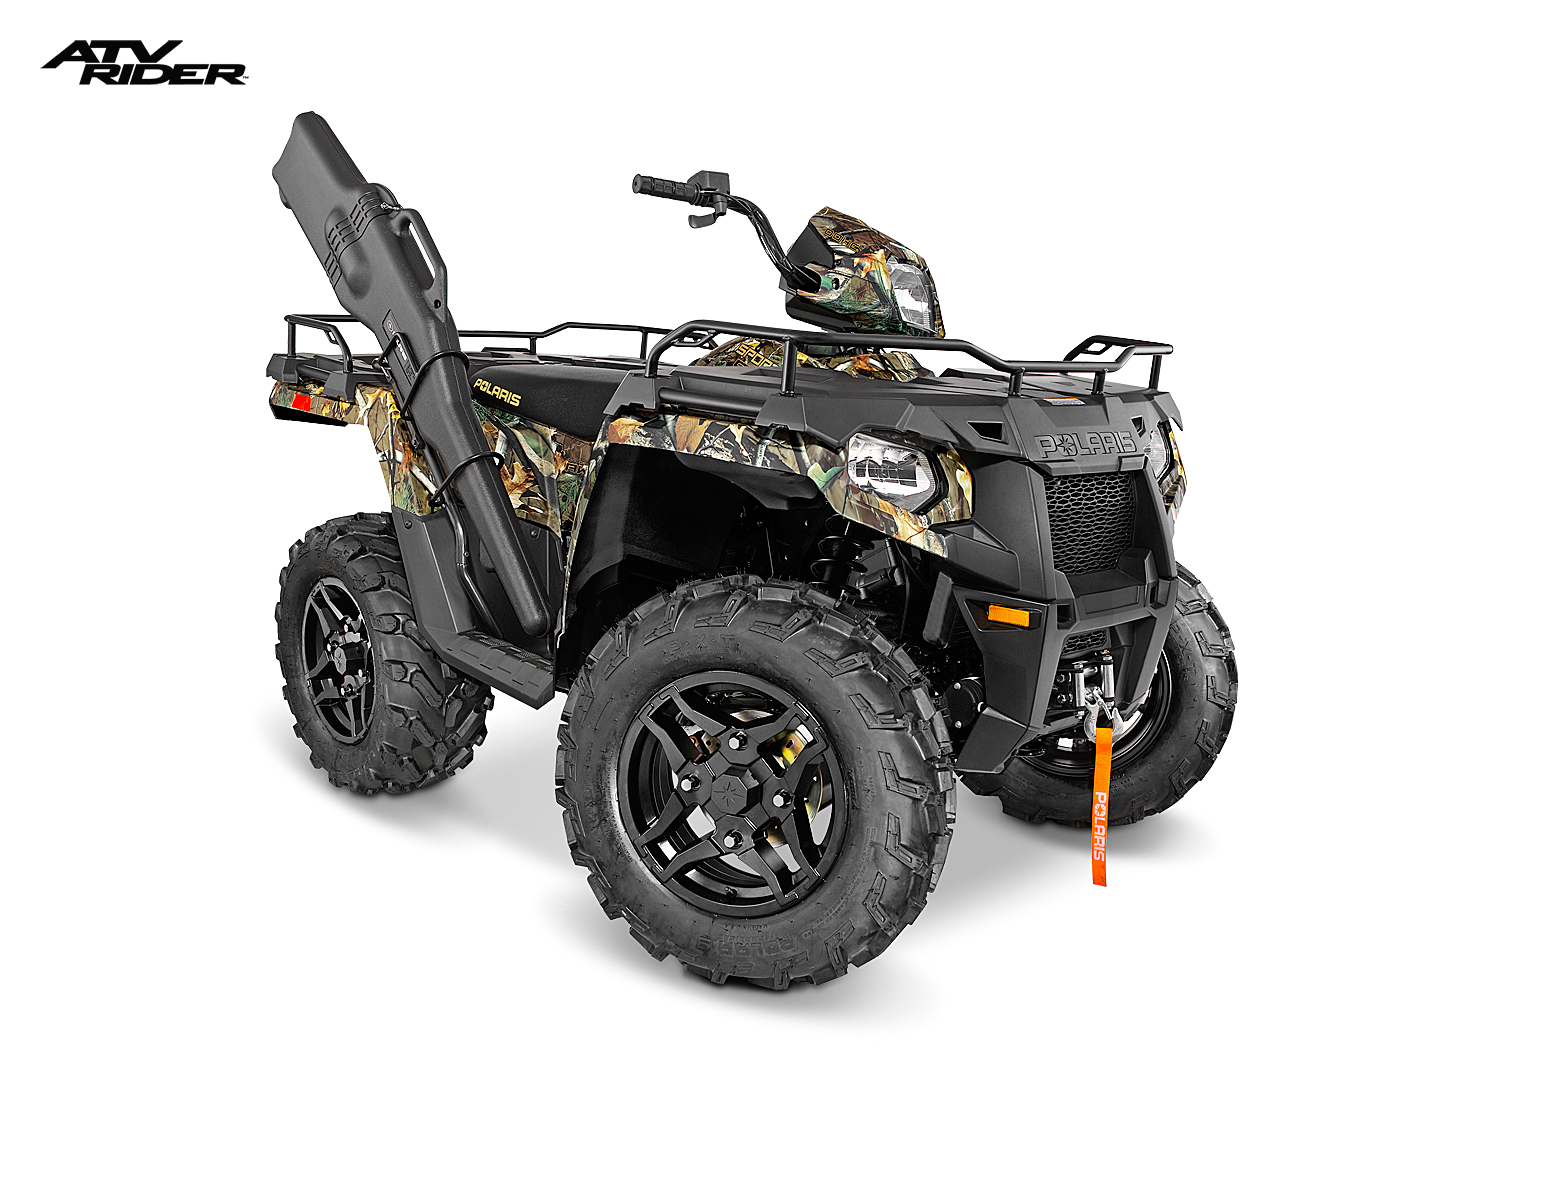 2015 Polaris Sportsman 570 SP 4x4 | ATV Rider